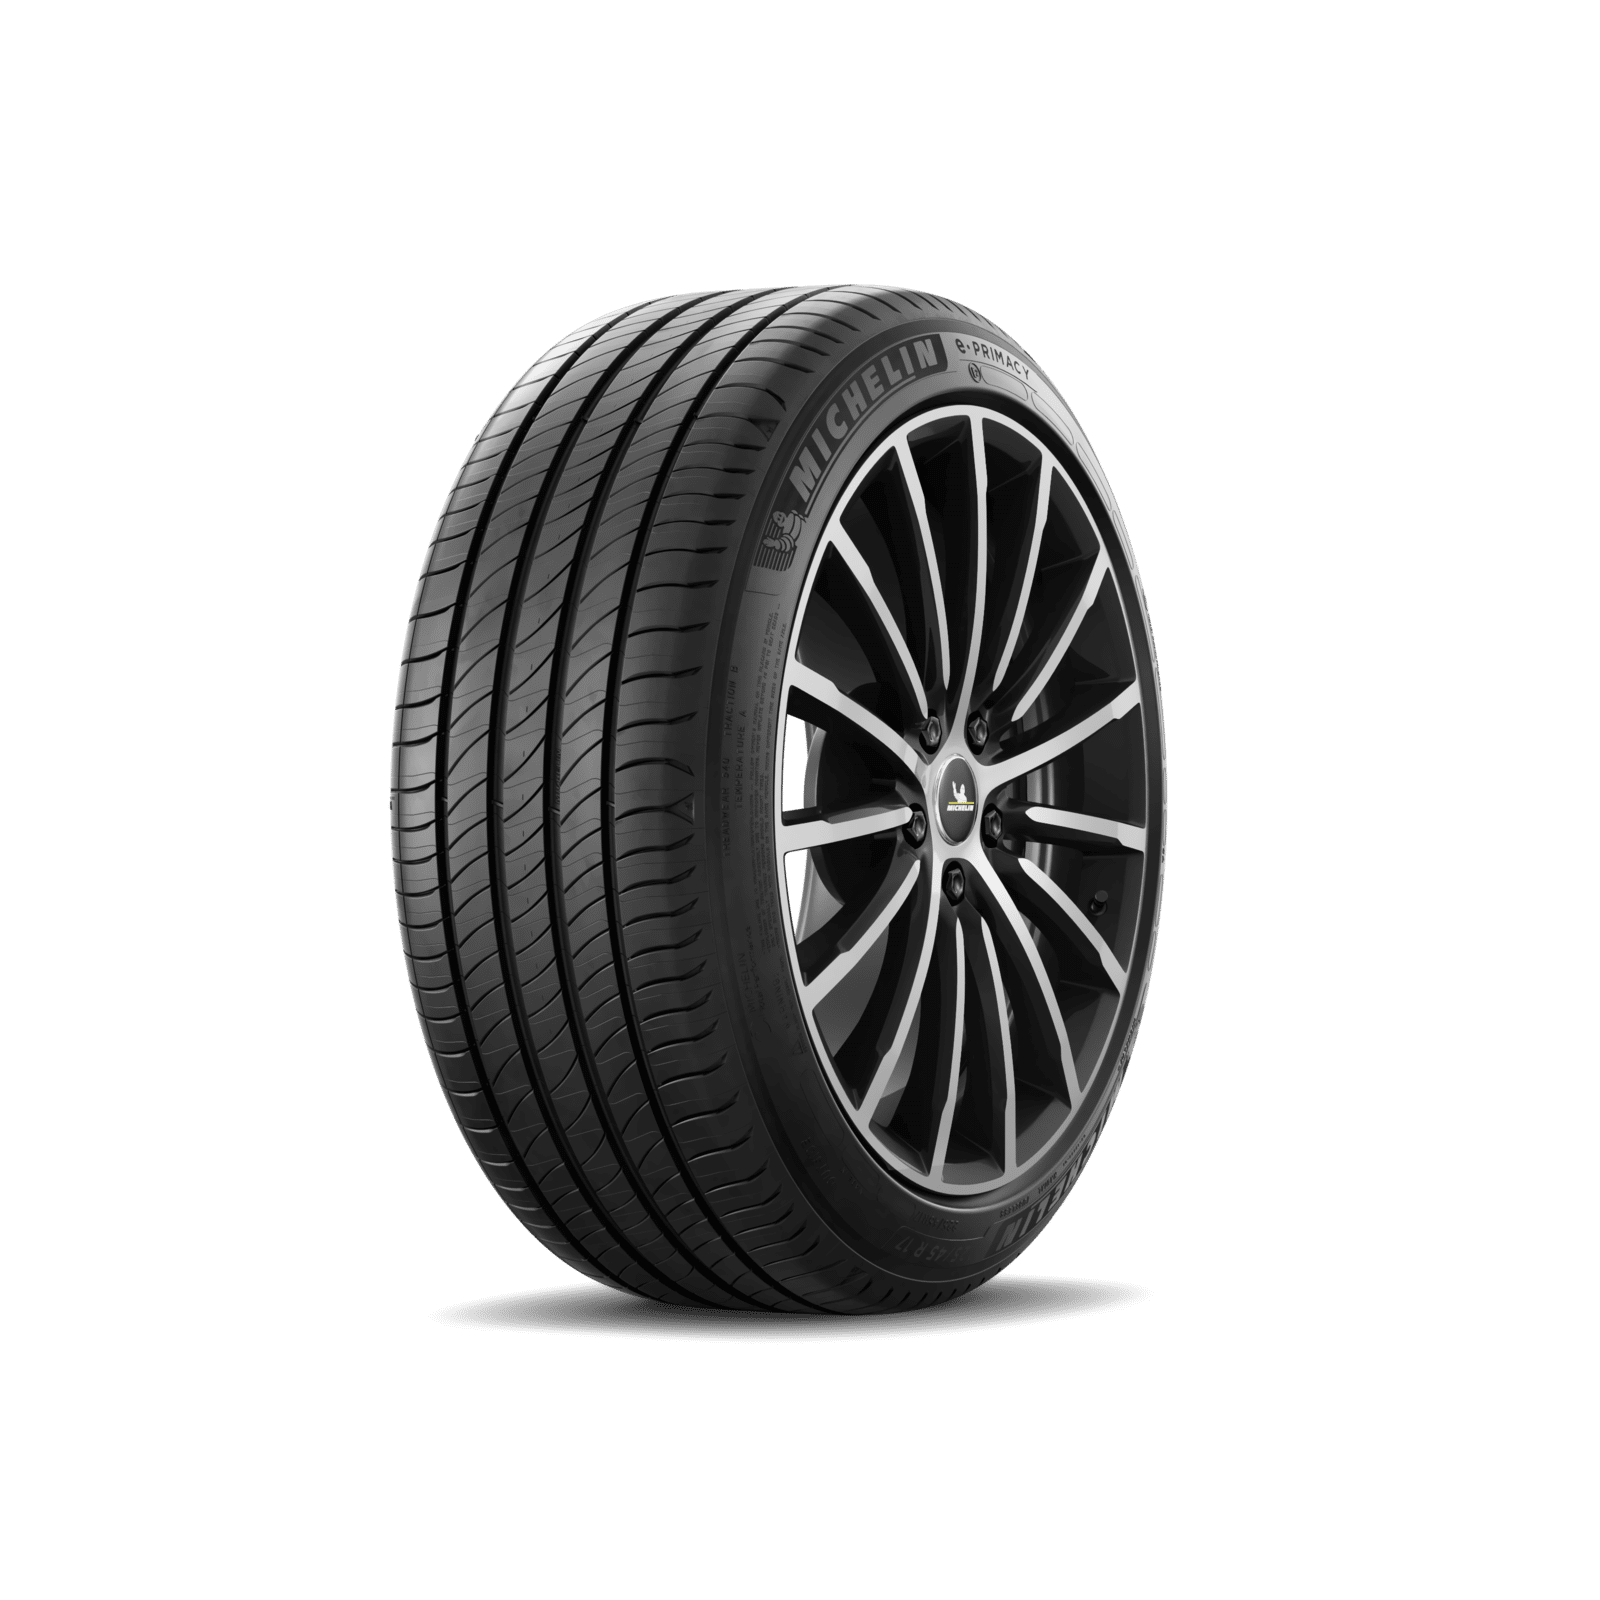 MICHELIN E PRIMACY - Car Tyre | MICHELIN United Kingdom Official Website